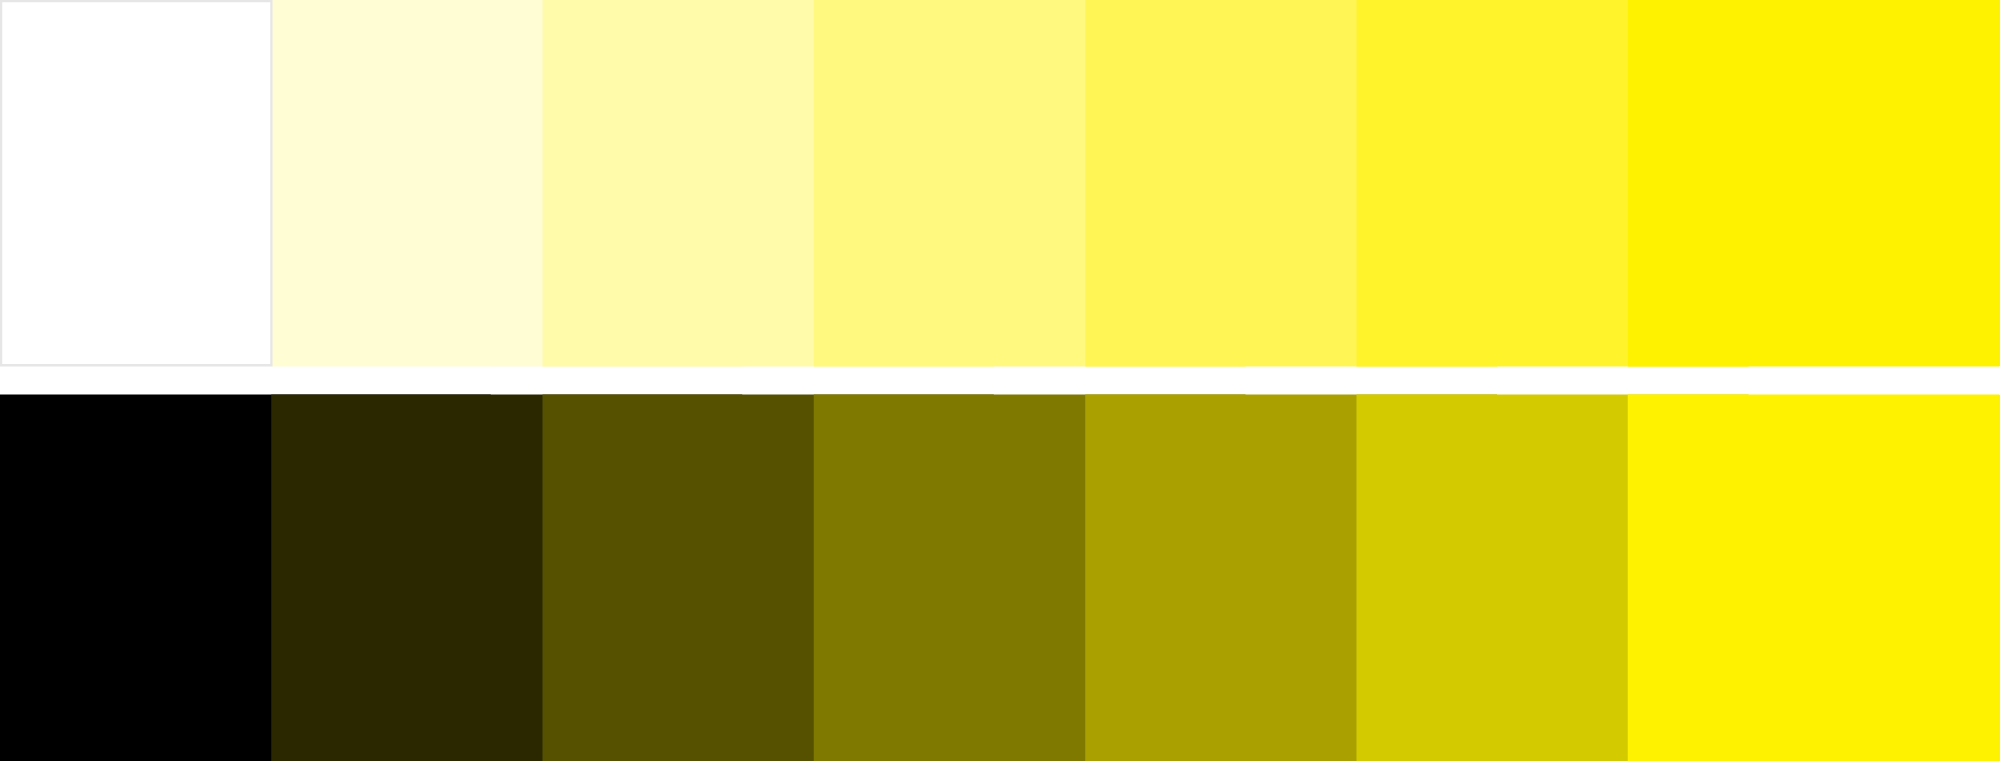 yellow tints and shades